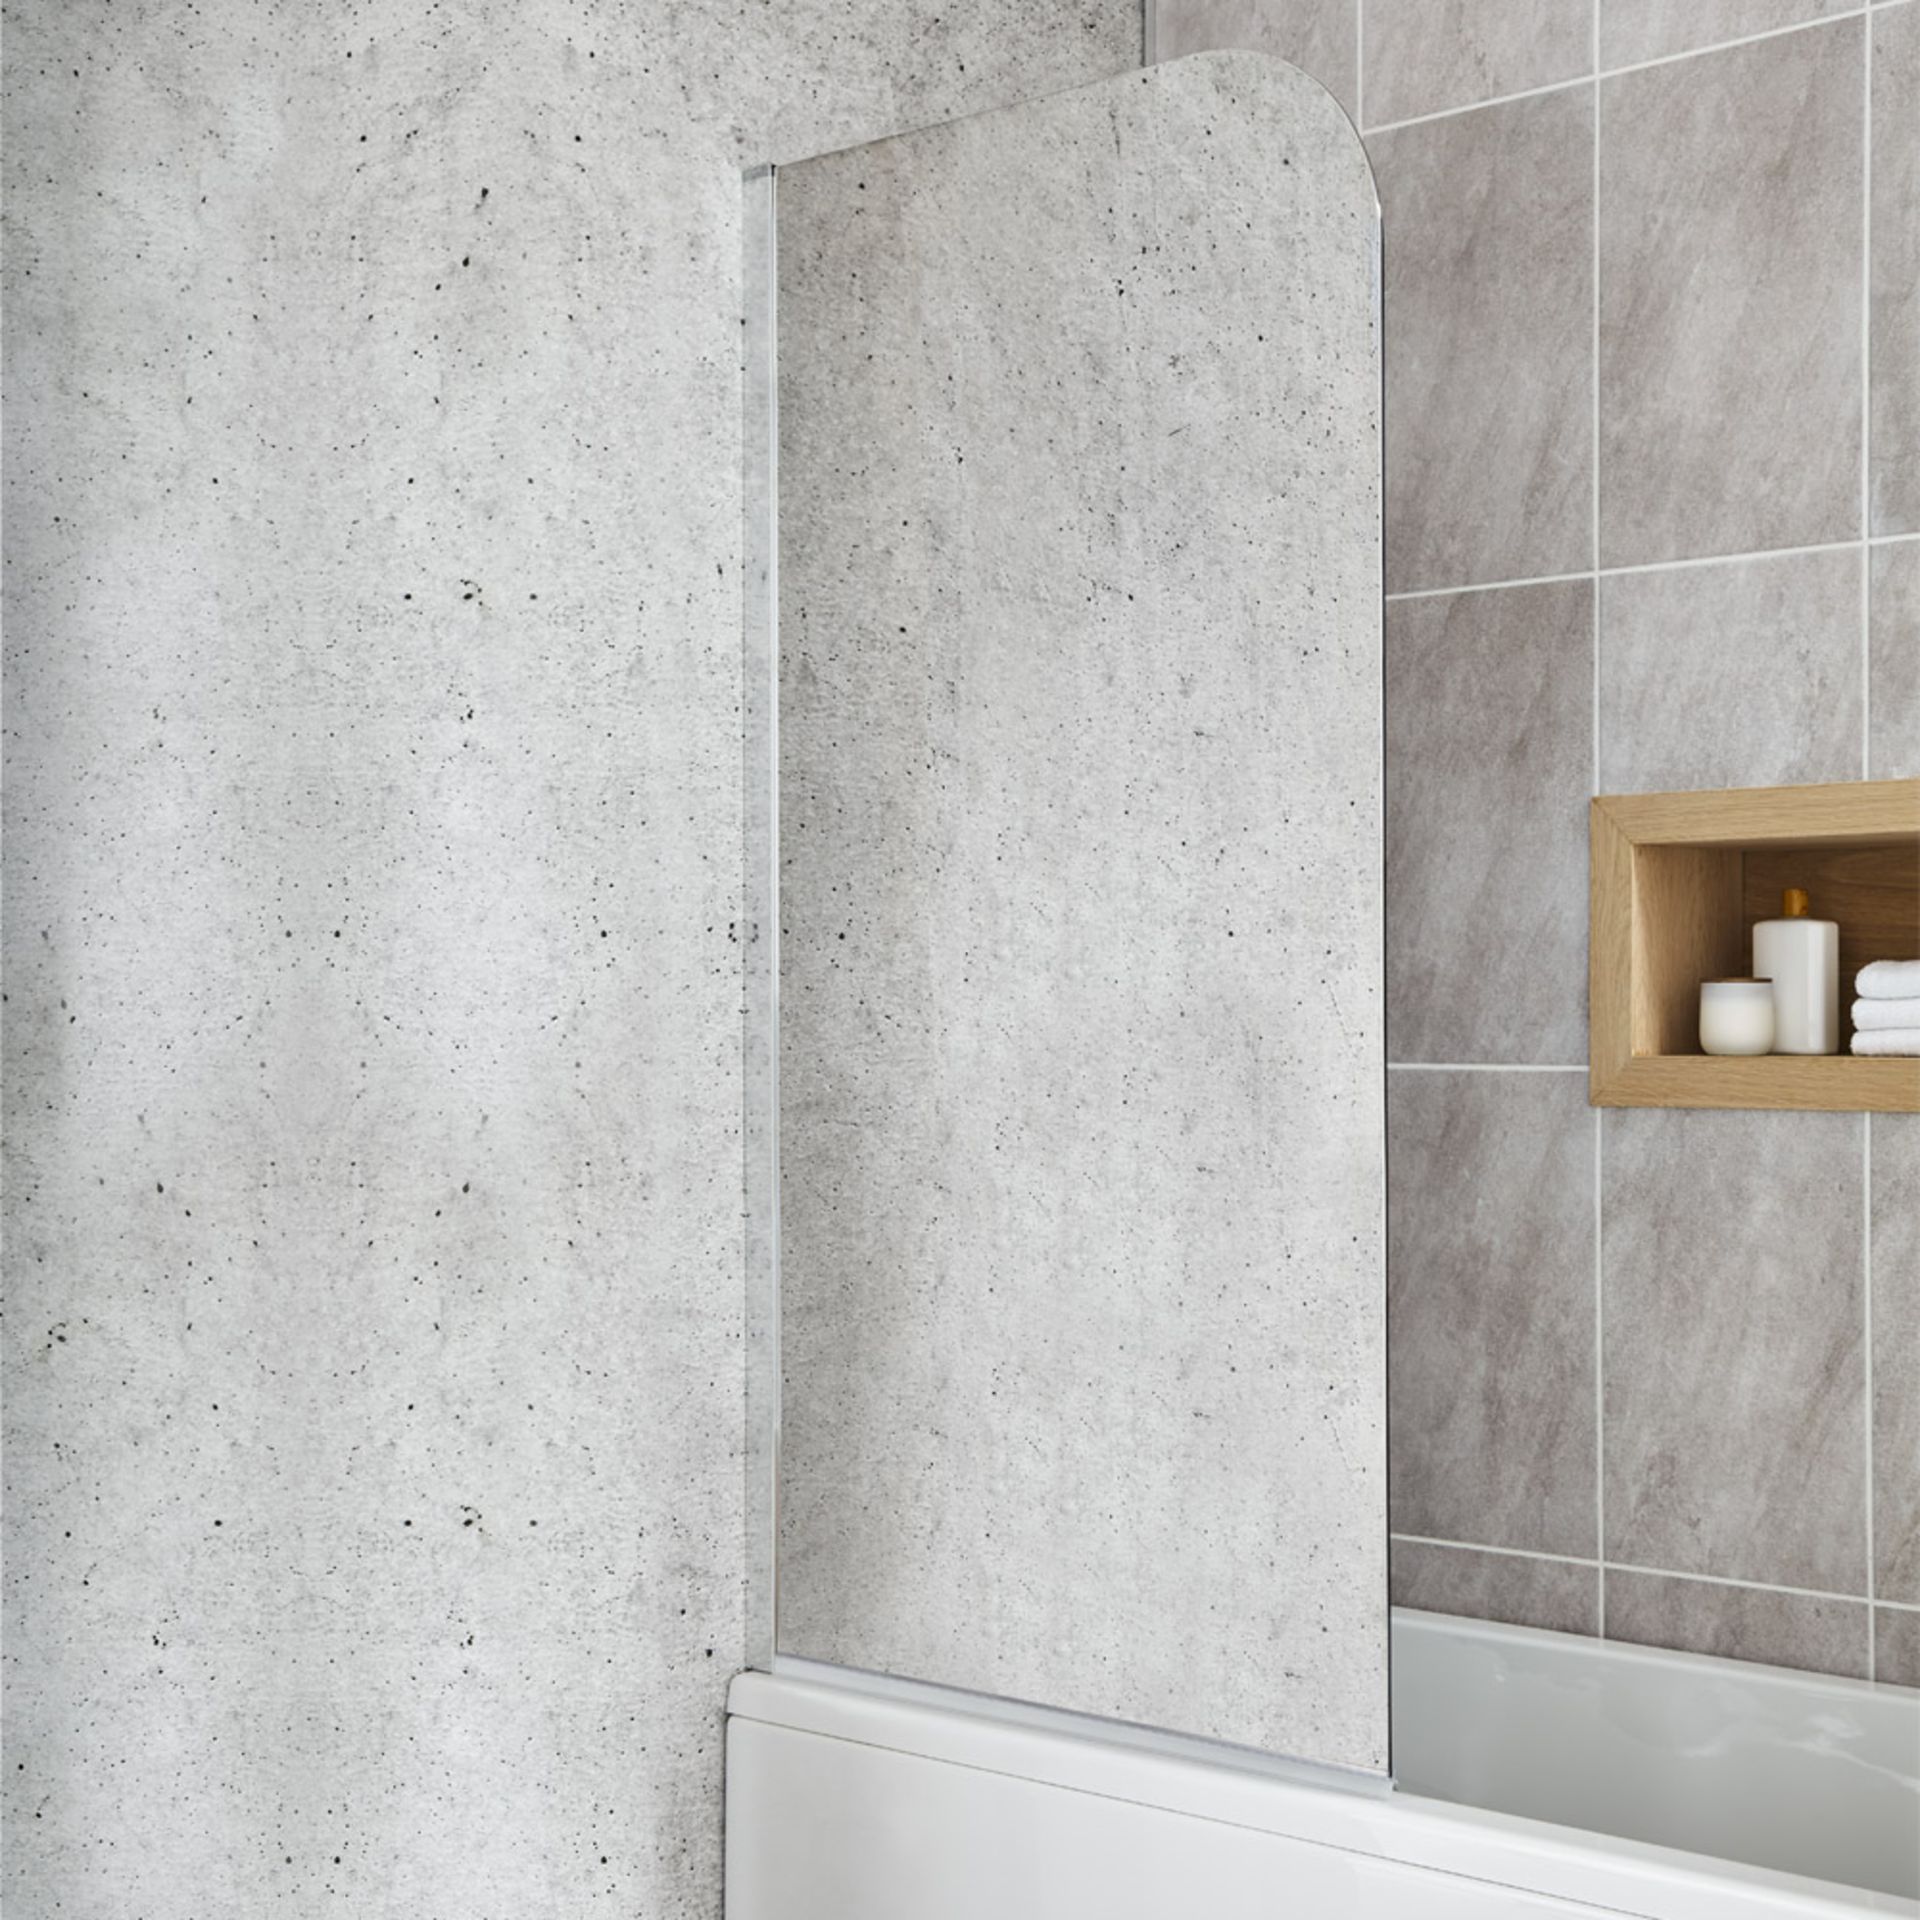 V Brand New Bathstore Atlantes 750 Mirrored Bath Screen Clean Plus - Left Hand Side - Homebase Price